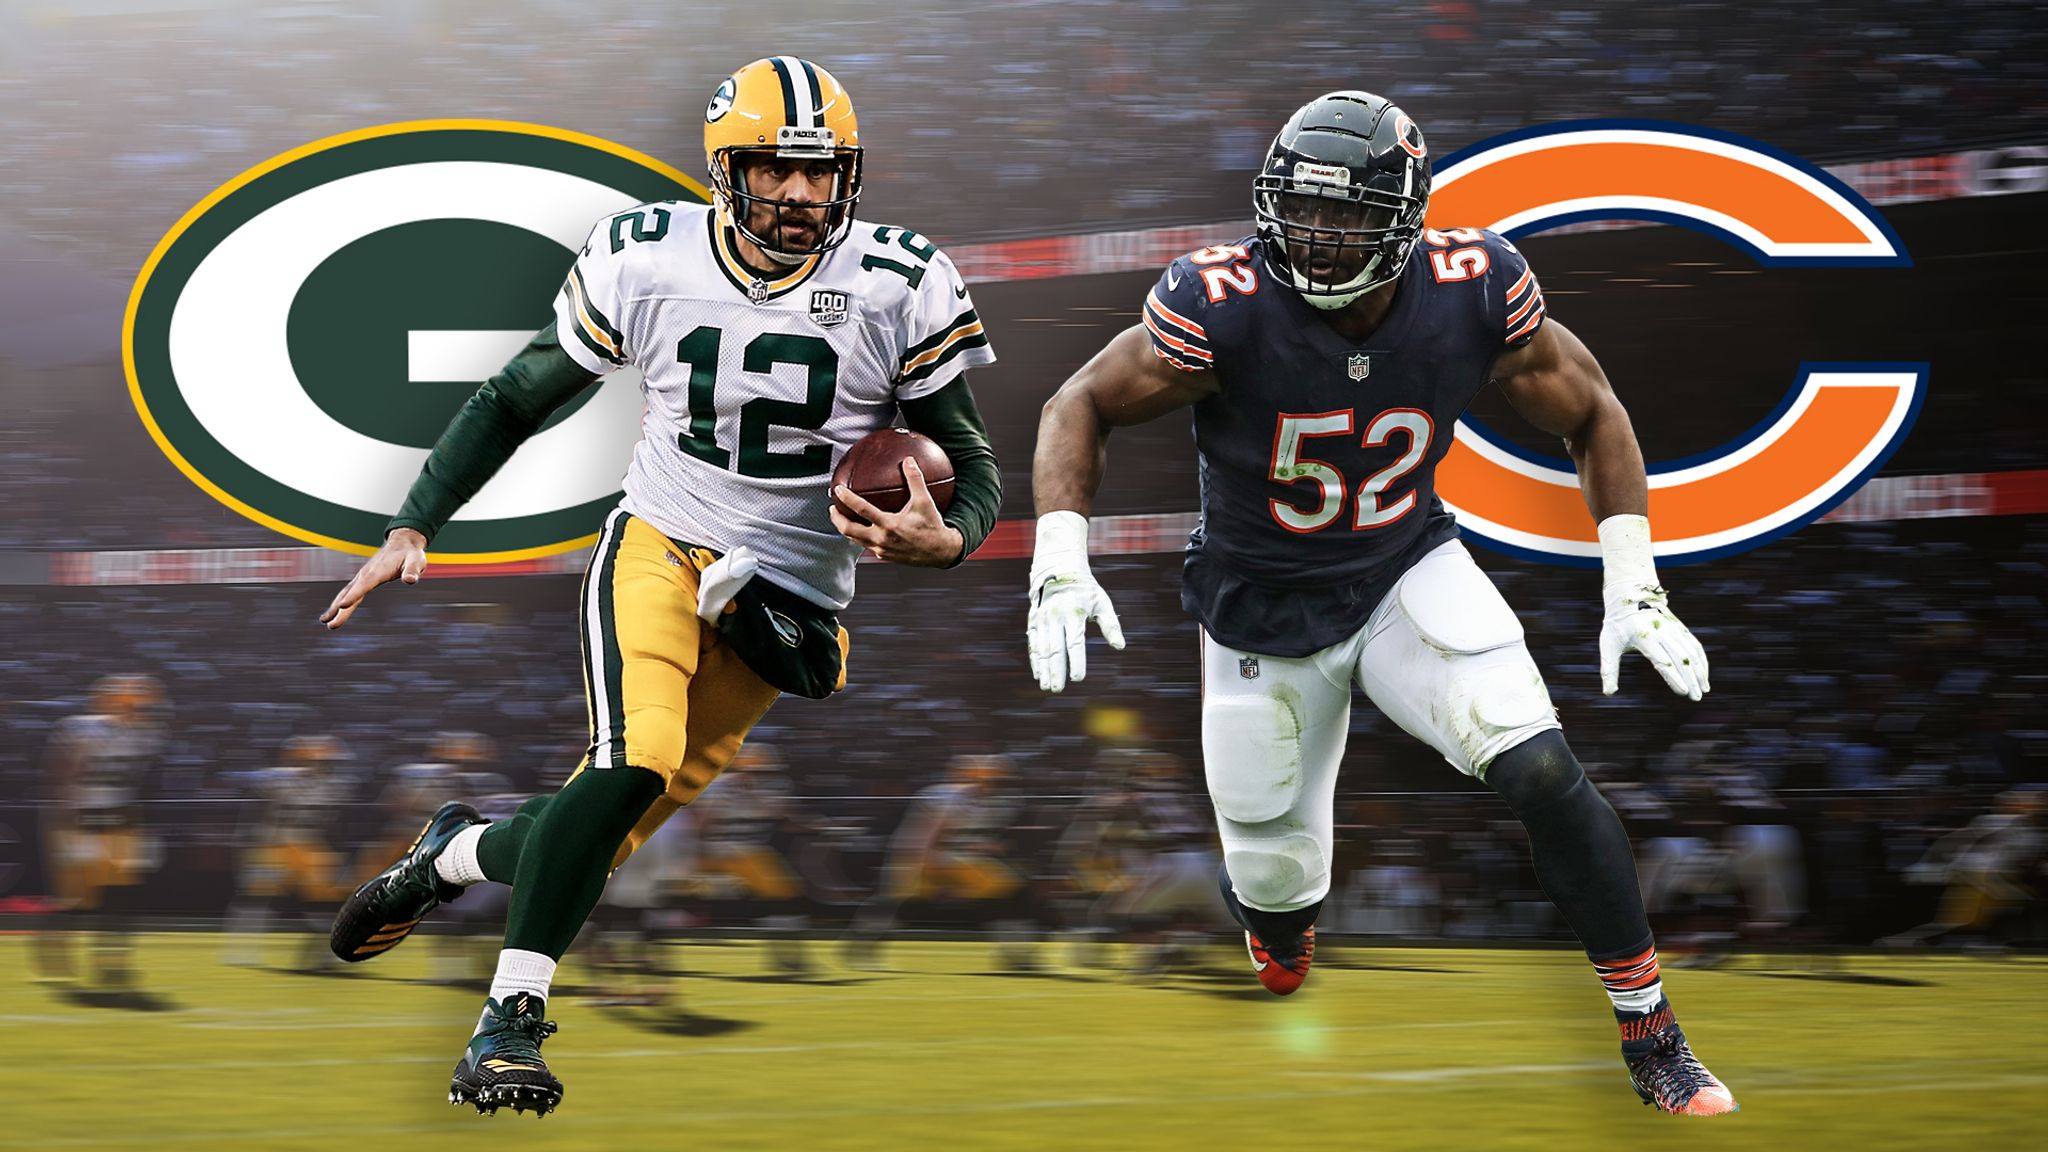 Green Bay Packers @ Chicago Bears kicks off NFL's 100th season | NFL News | Sky Sports